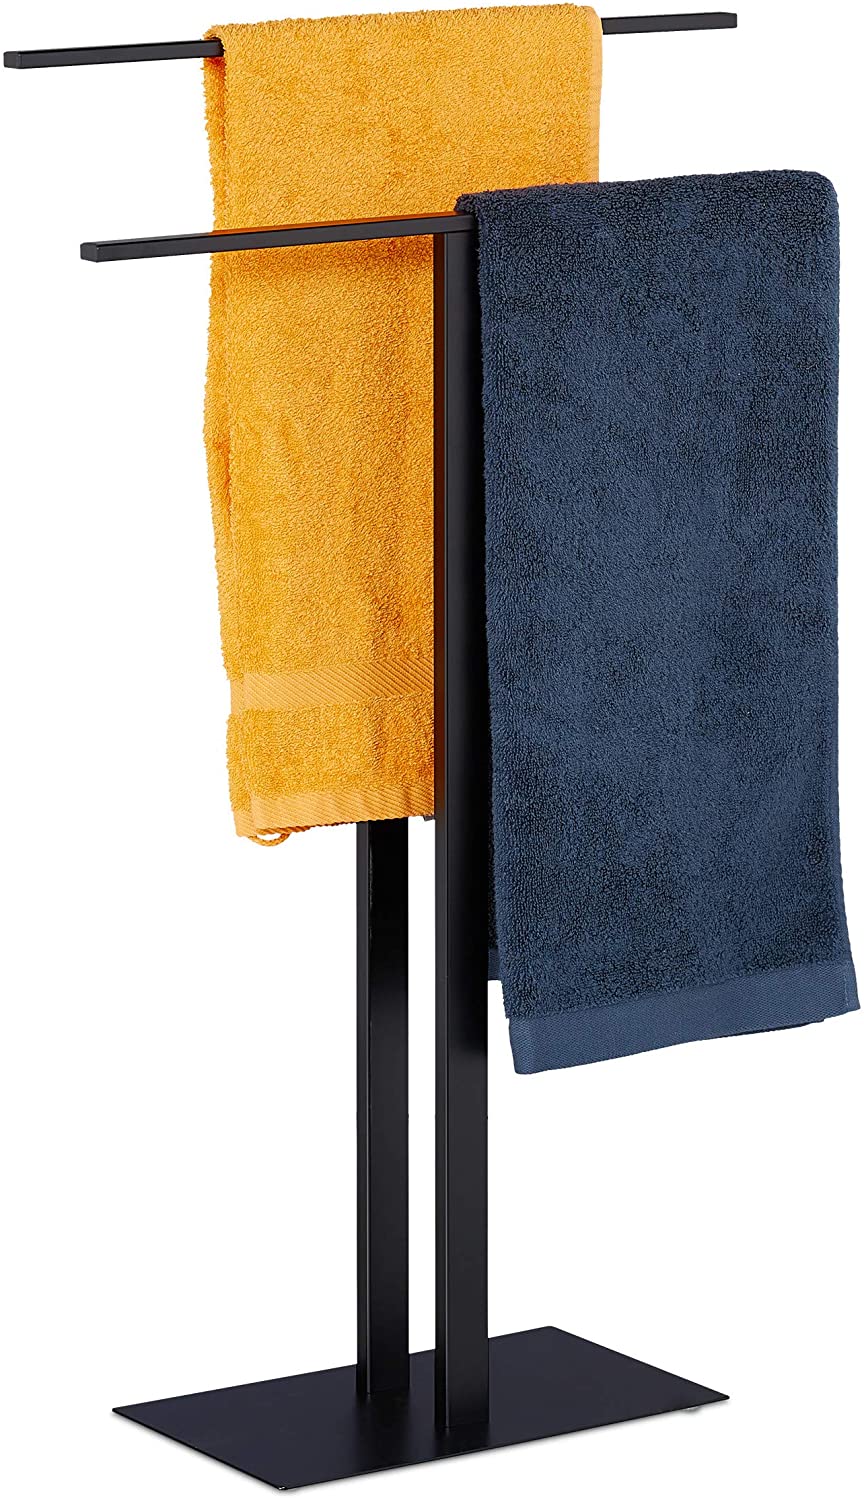 Relaxdays Towel Rail 2 Bars Free Standing Bathroom Iron Double Towel Rail H